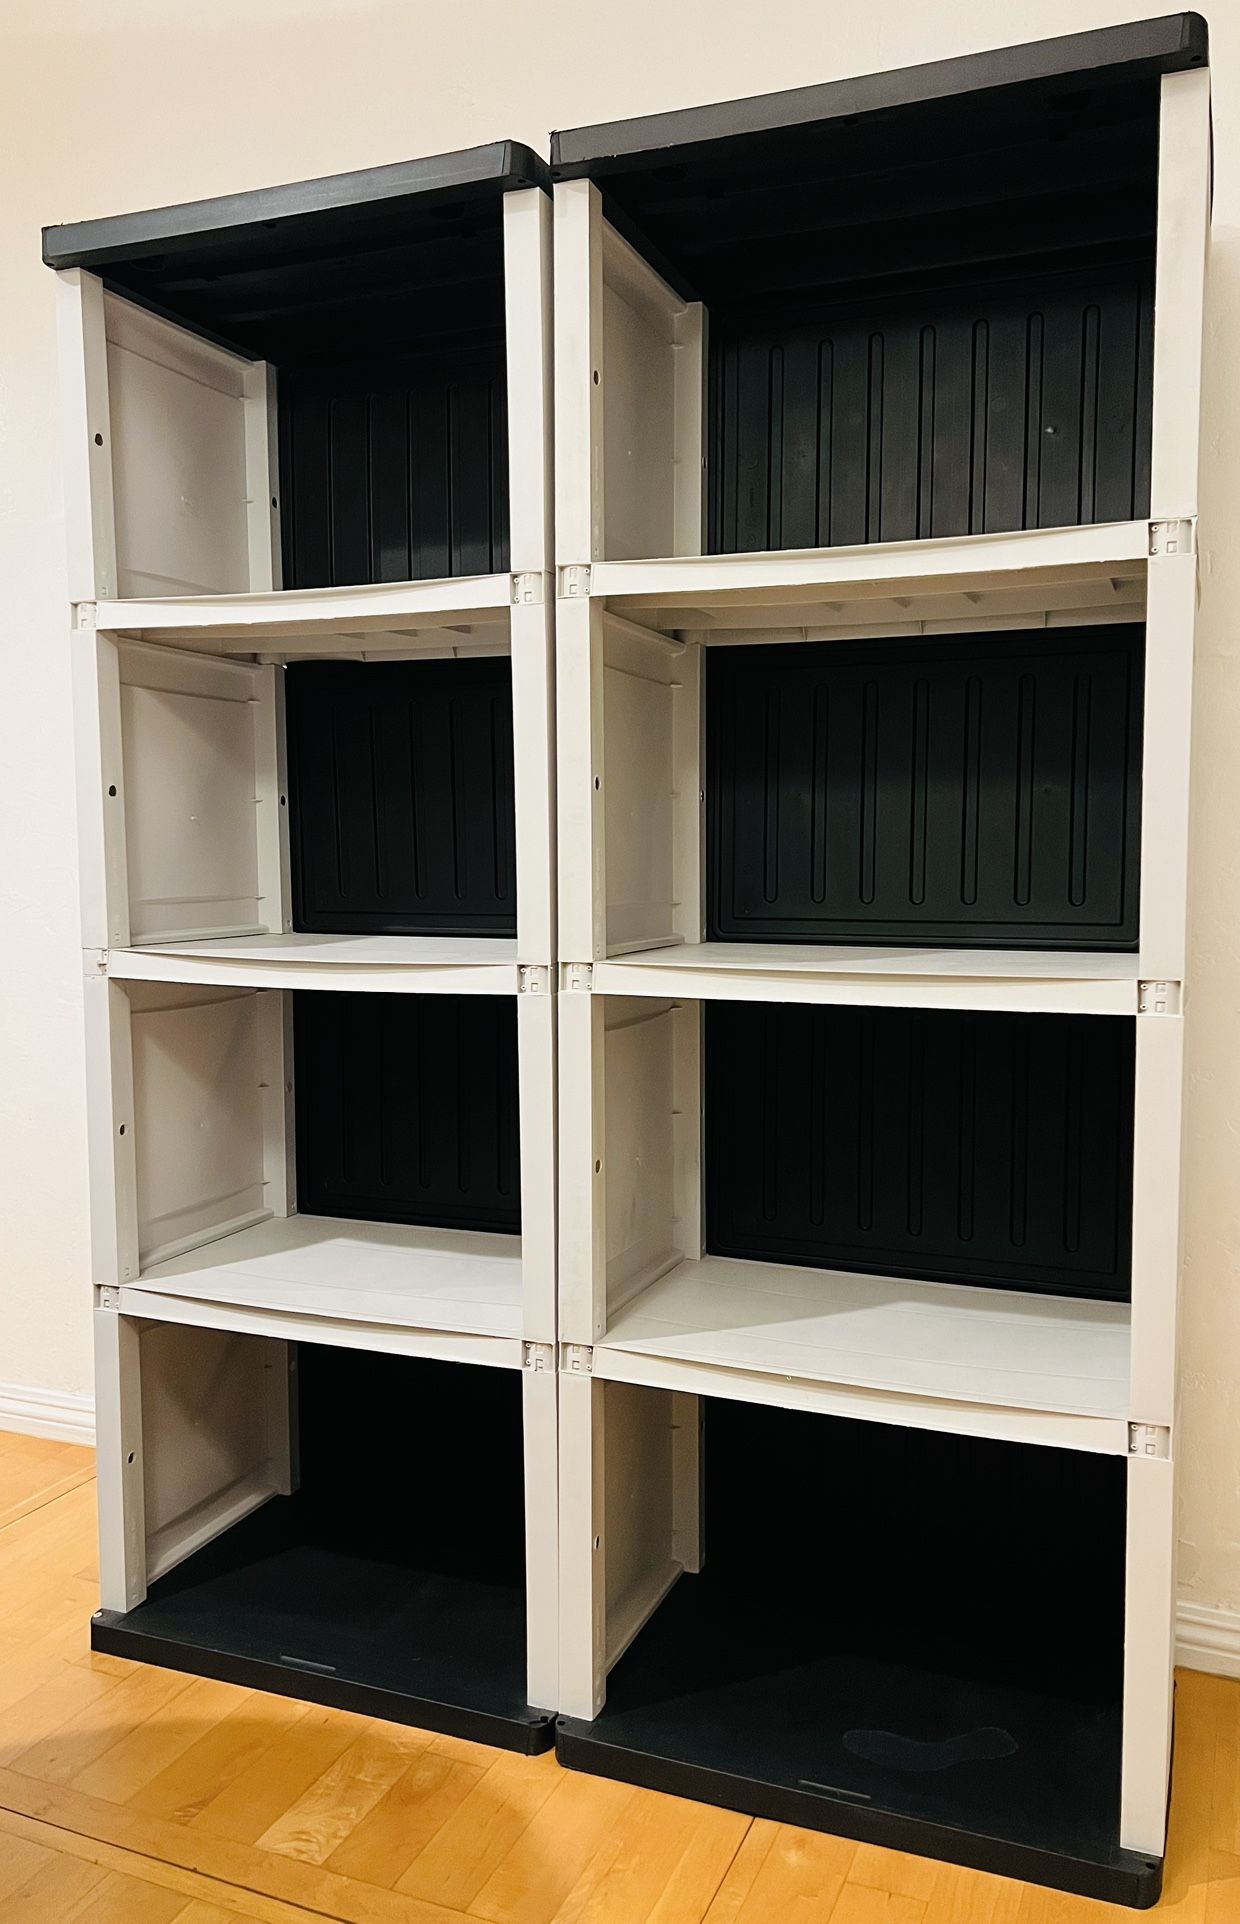 Storage Shelves 5 Tiers - 2 Units